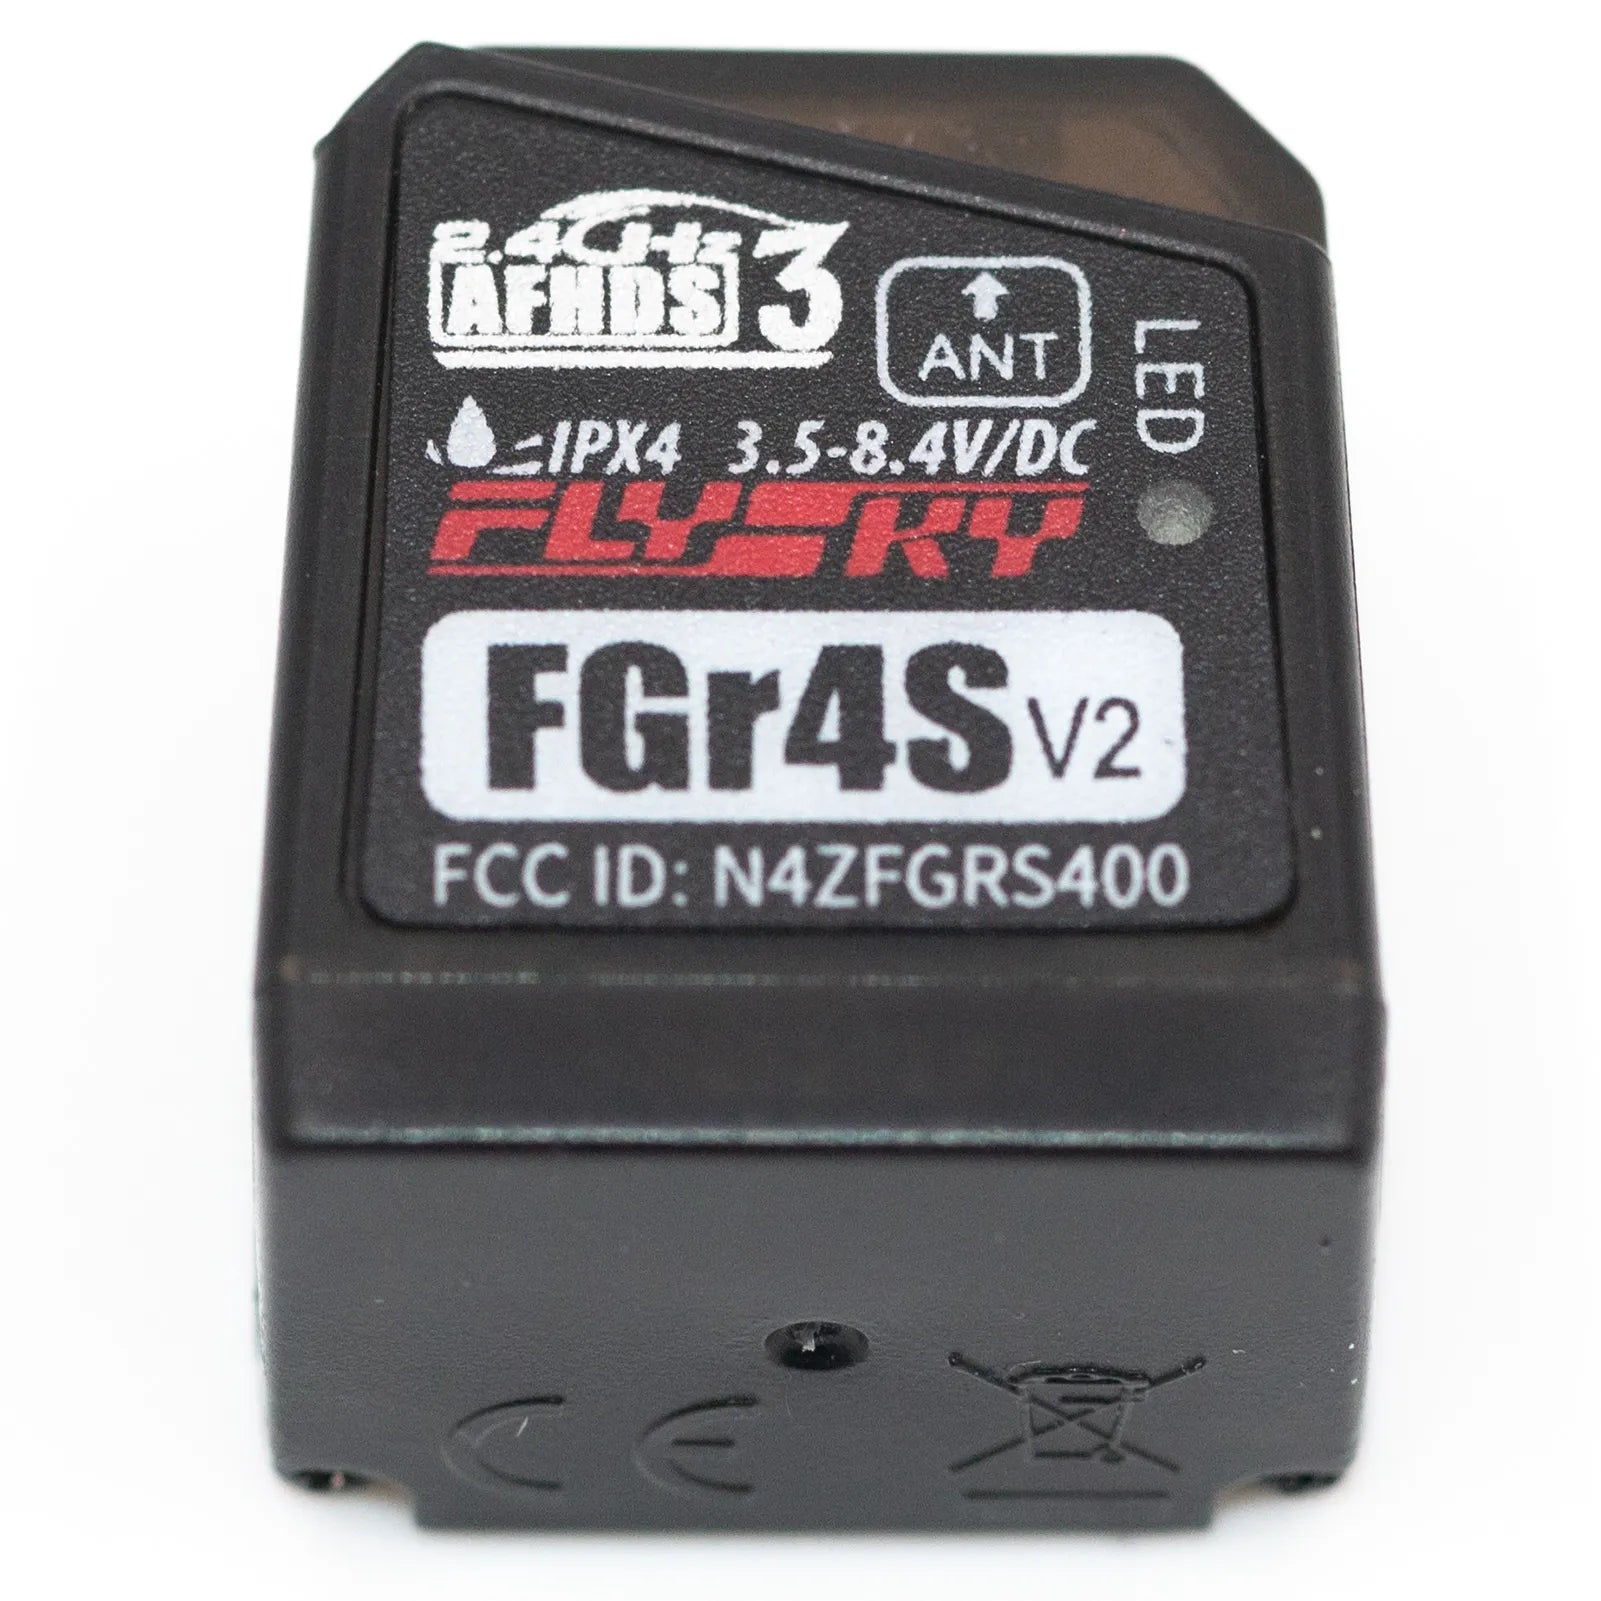 Flysky FGR4S V2 Receiver, FGr4Svz FCC ID: NAZFGRSAOO .